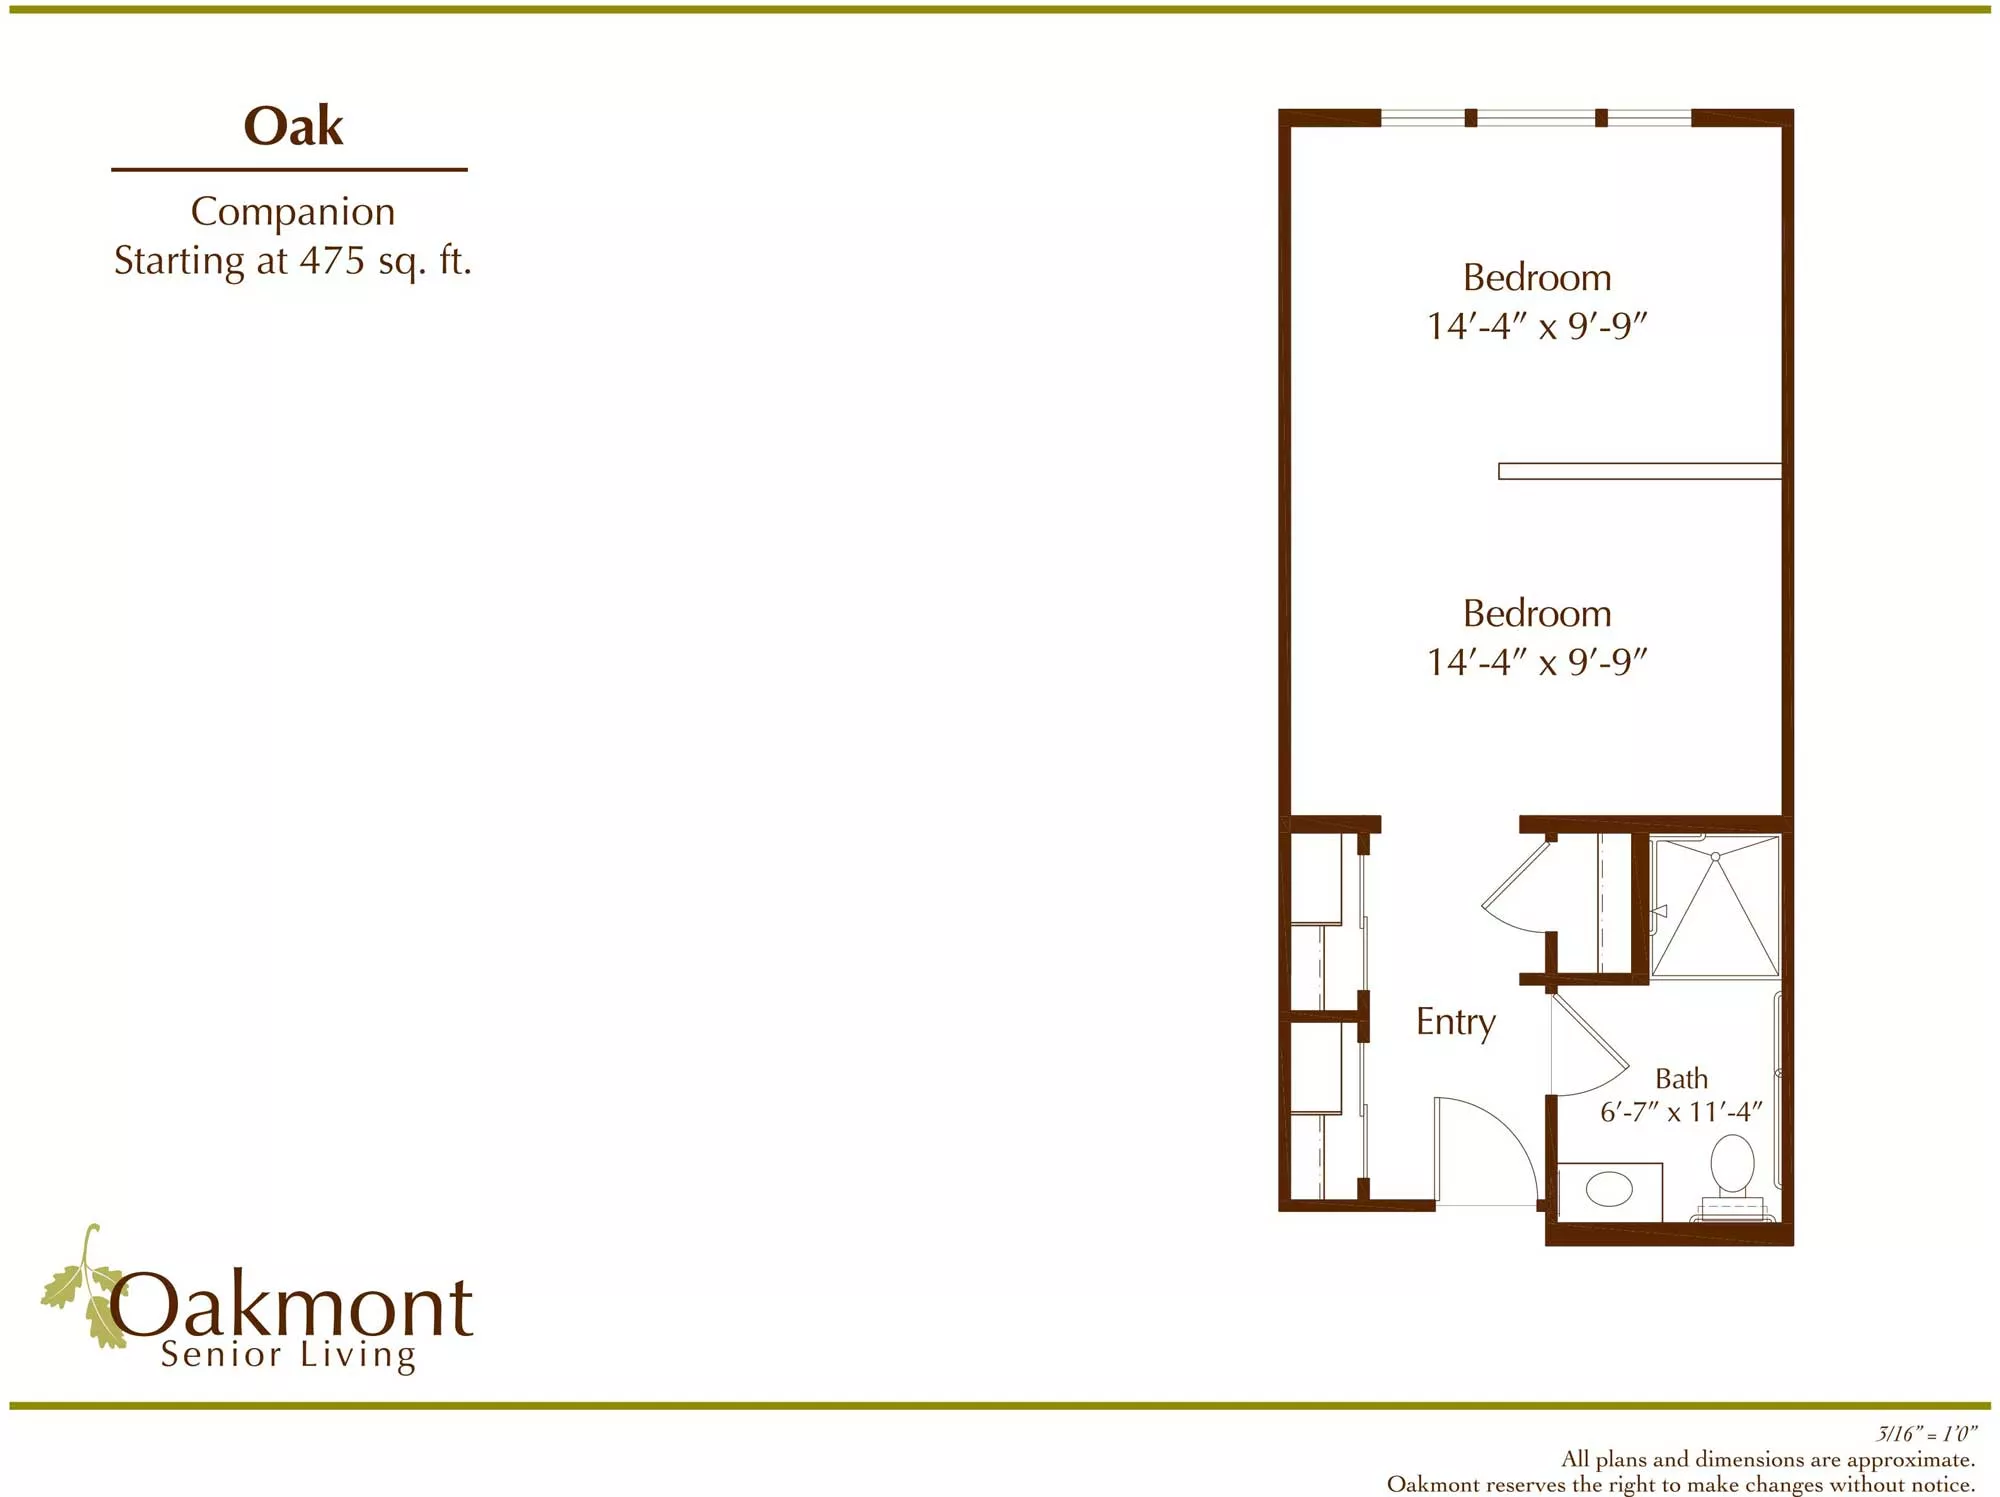 Oak companion floor plan